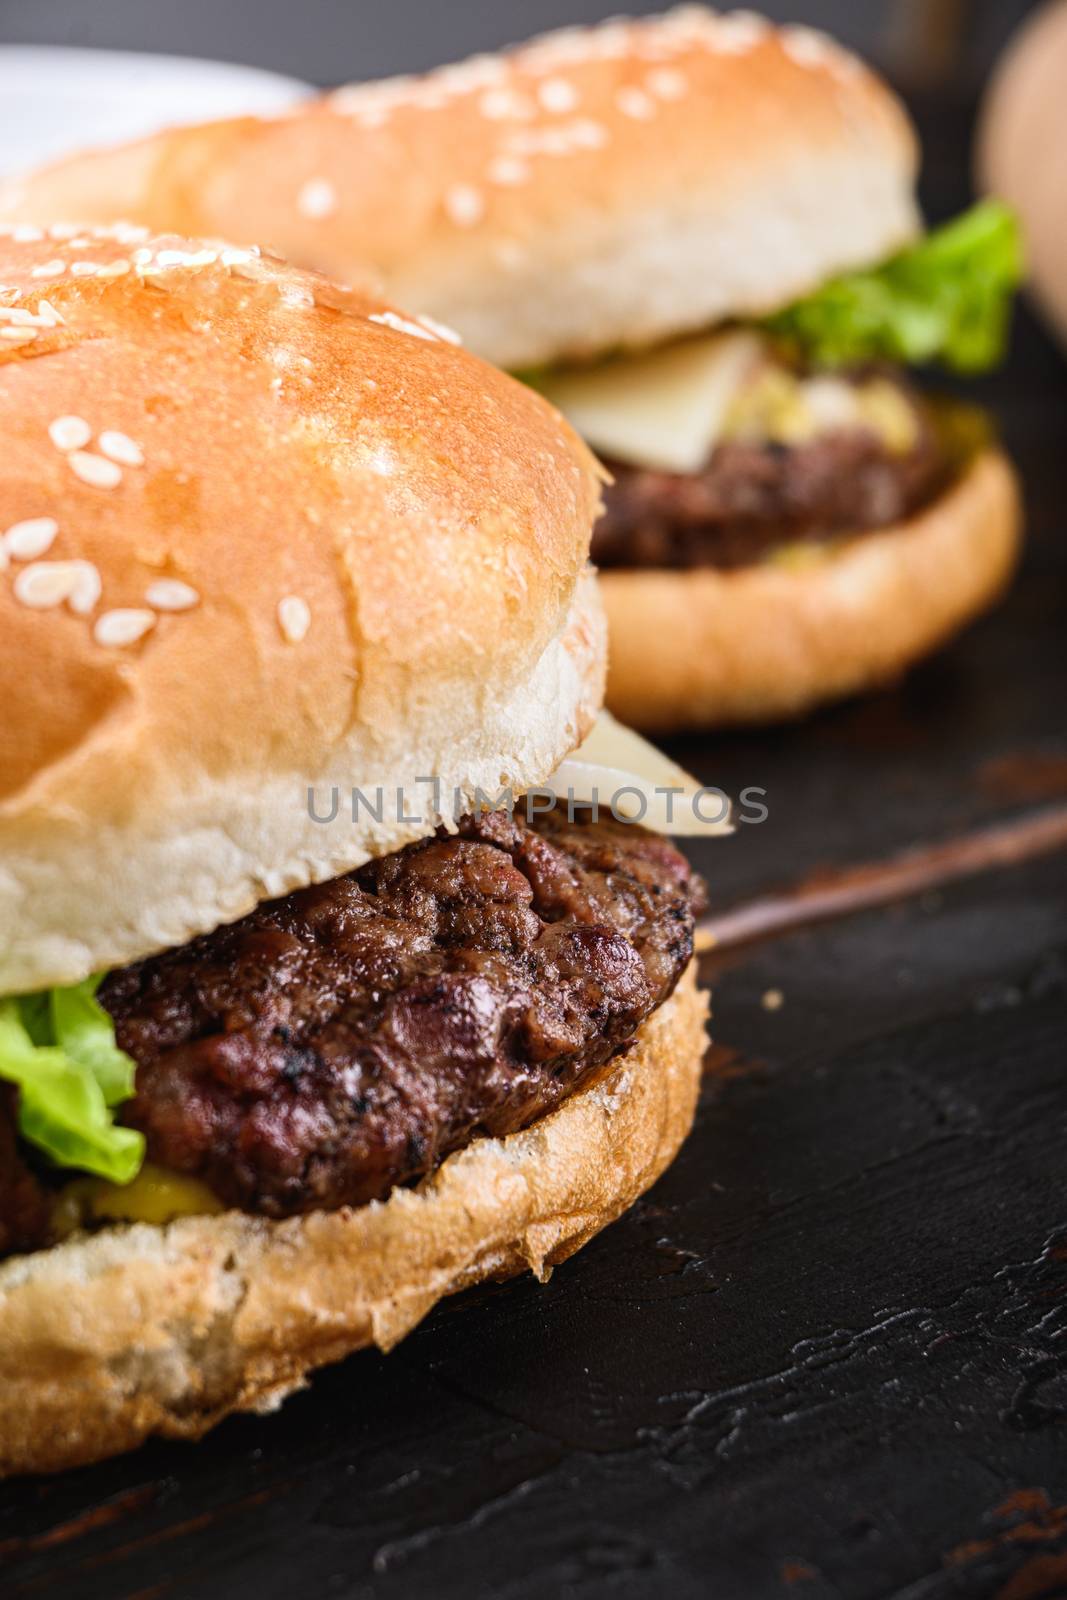 Homemade beef burgers on dark wooden background by Ilianesolenyi